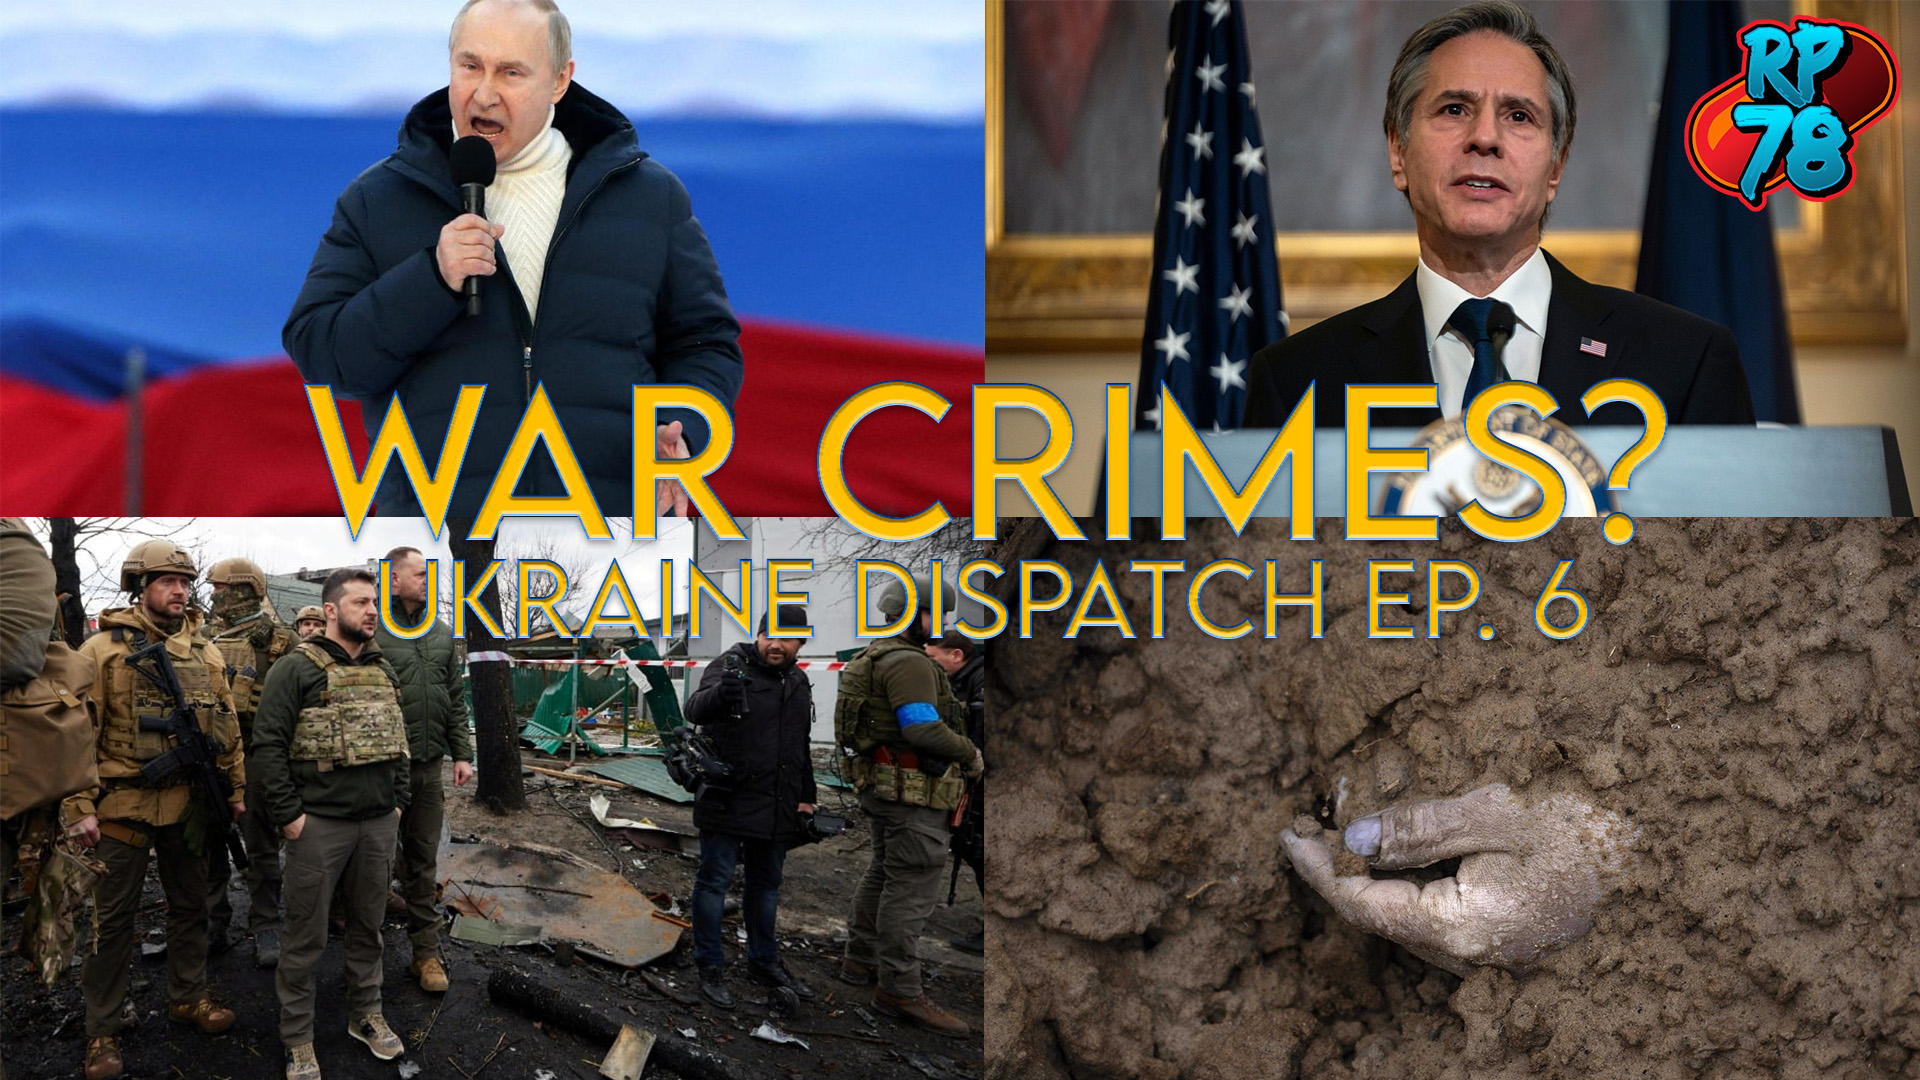 Is Russia Committing War Crimes? Ukraine Dispatch Ep. 6 with John Mark Dougan